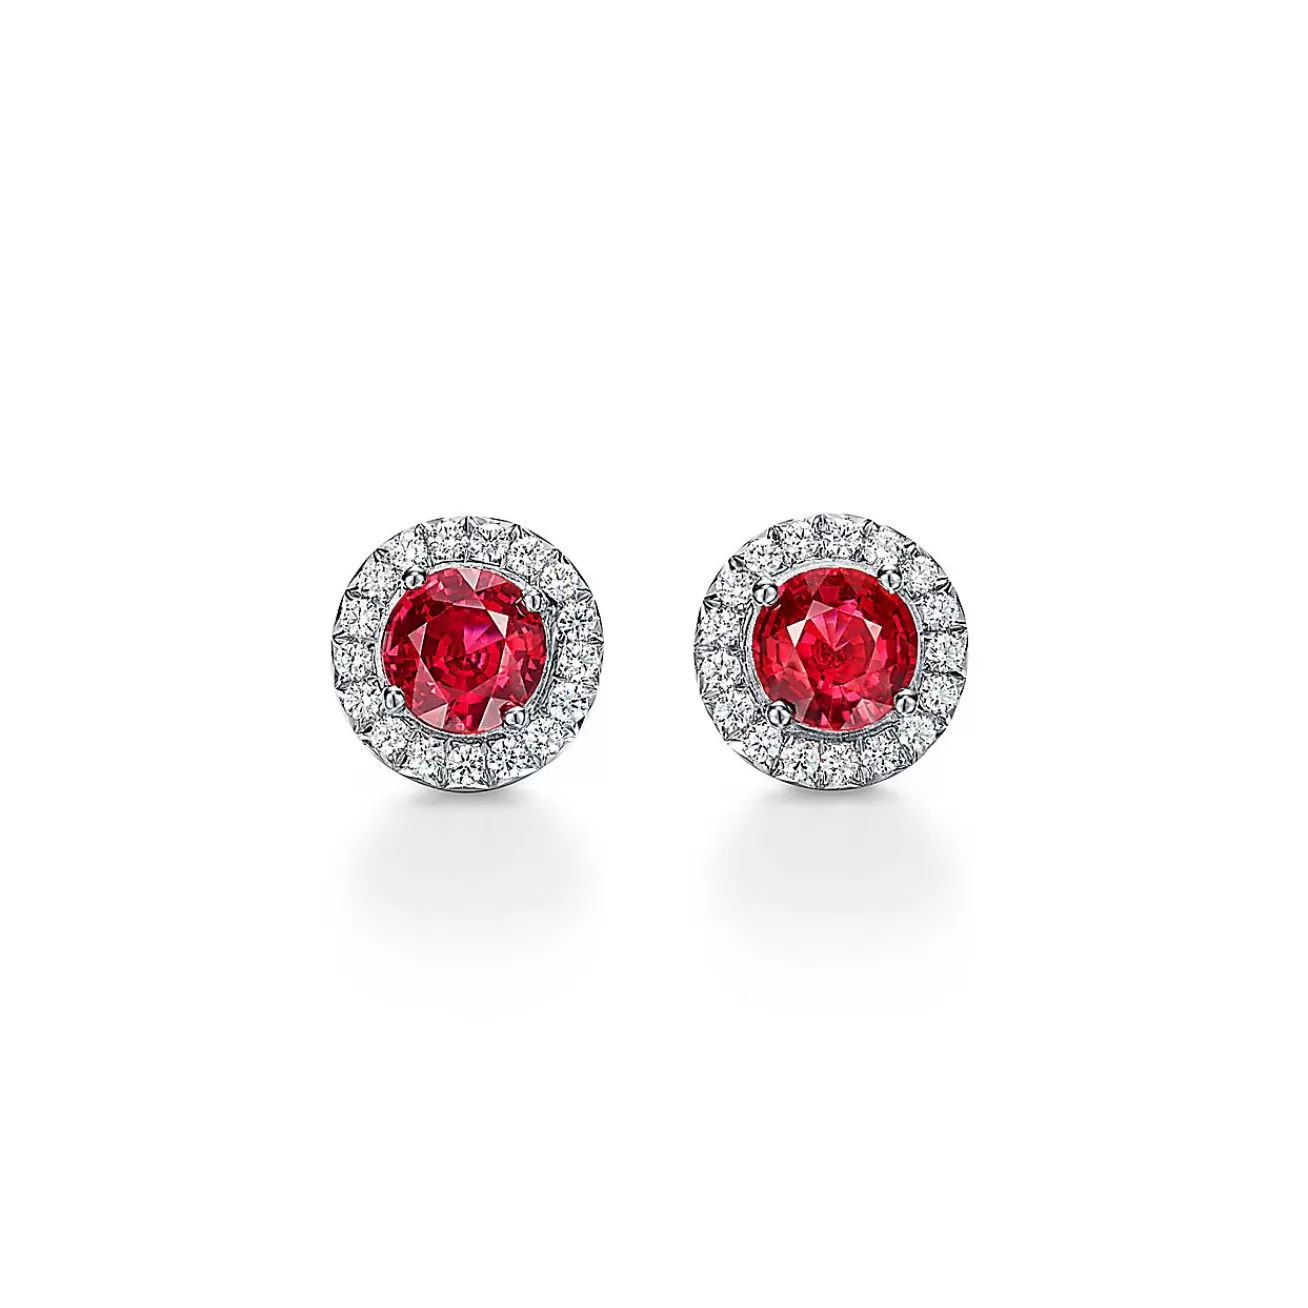 Tiffany & Co. Tiffany Soleste® earrings with rubies and diamonds. | ^ Earrings | Colored Gemstone Jewelry